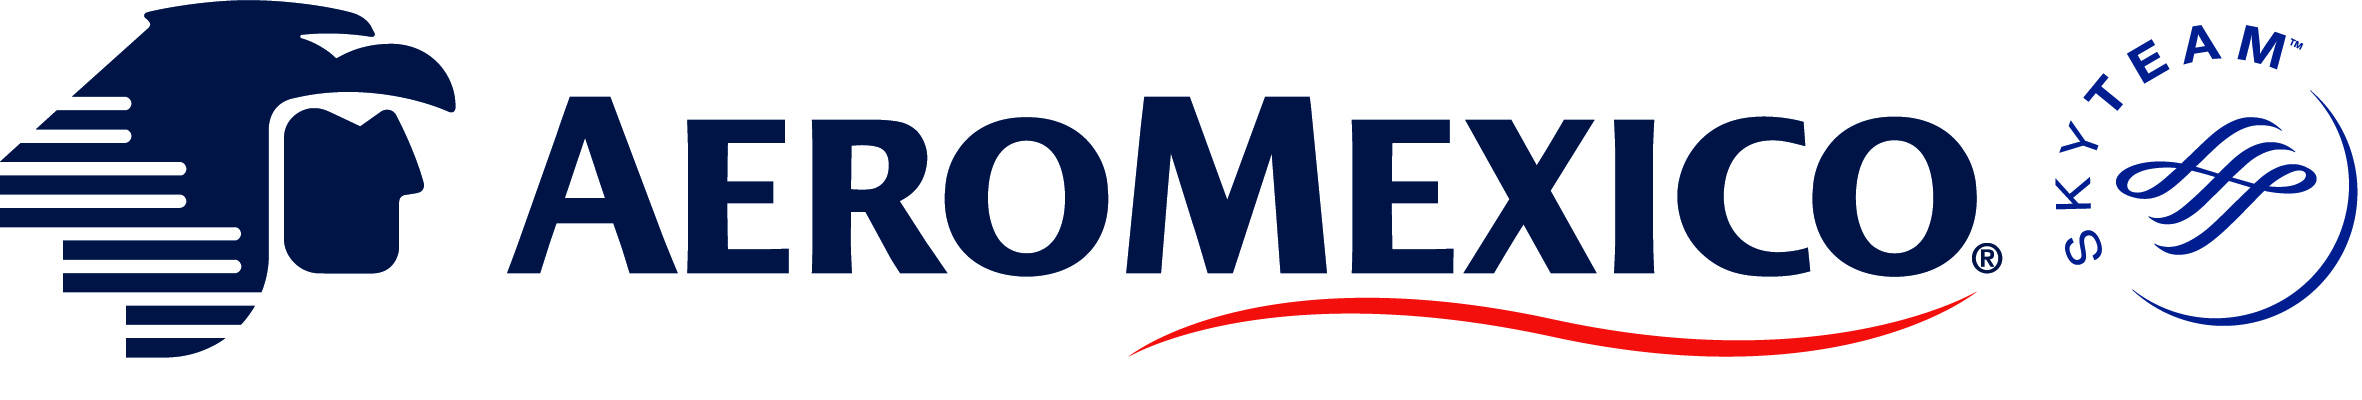 Logo of Aeromexico